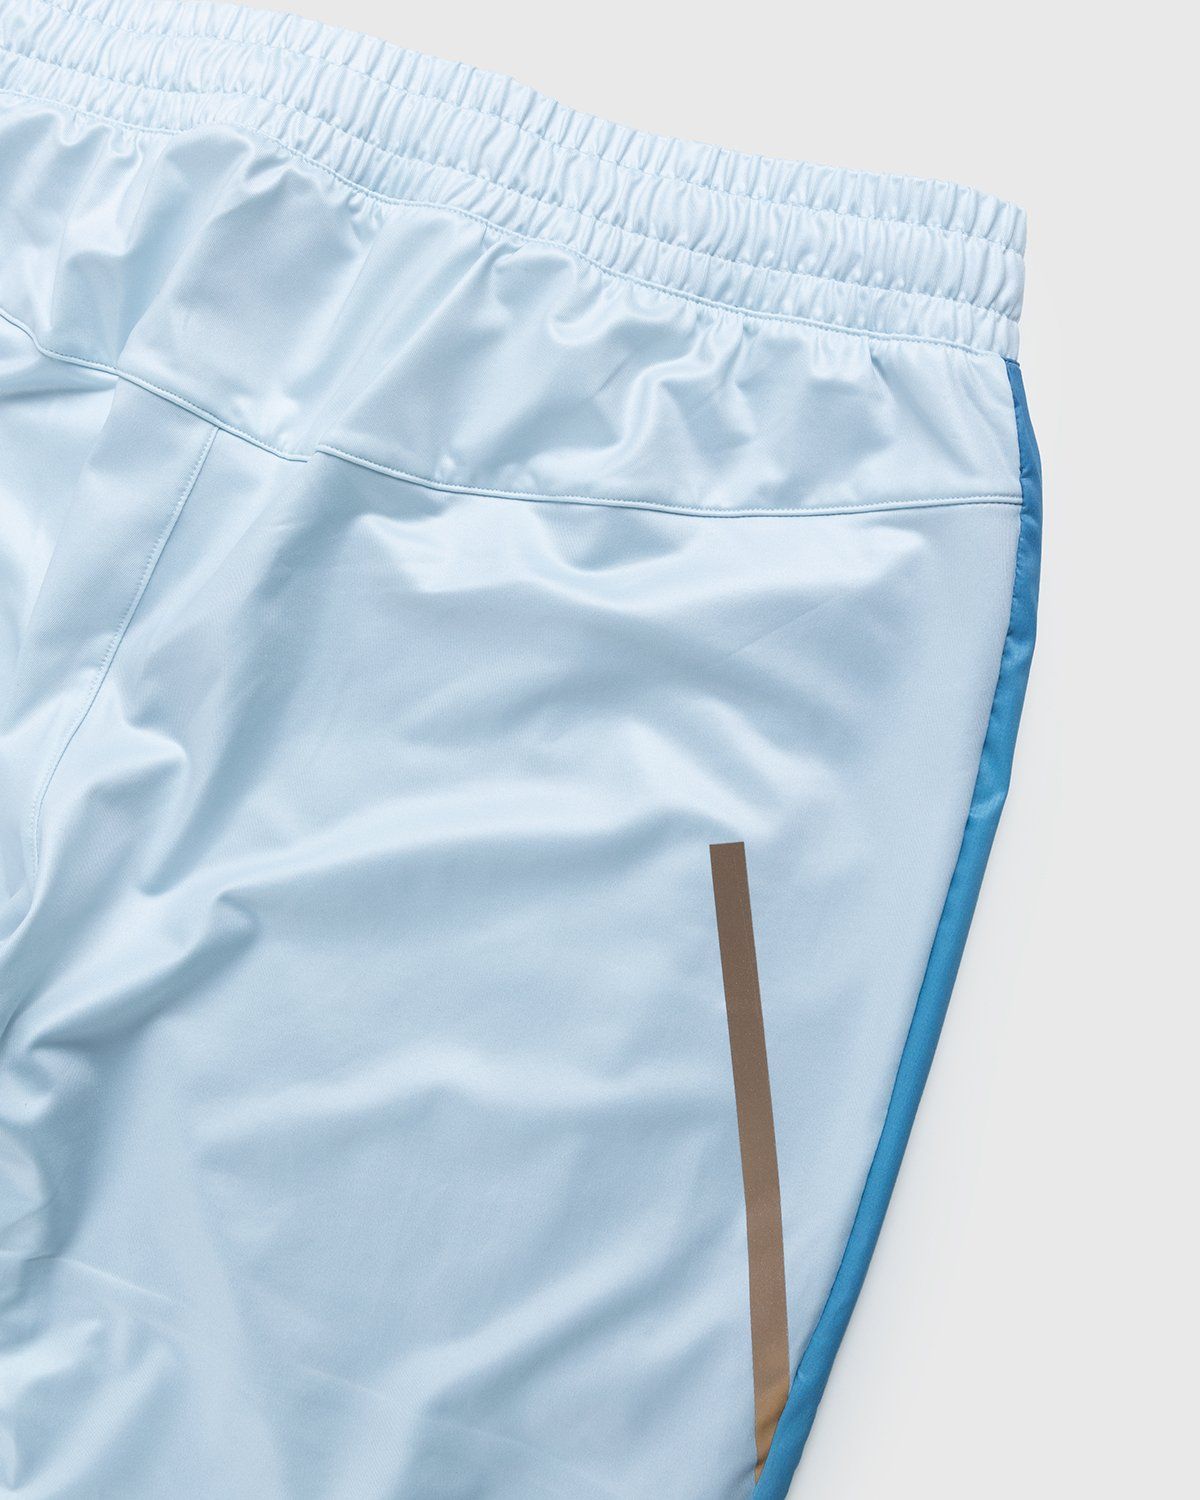 Loewe x On – Men's Technical Running Pants Gradient Grey - Active Pants - Blue - Image 4